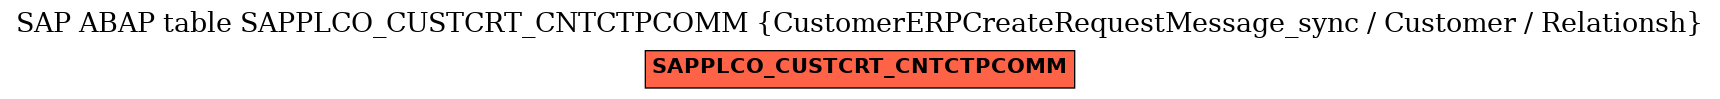 E-R Diagram for table SAPPLCO_CUSTCRT_CNTCTPCOMM (CustomerERPCreateRequestMessage_sync / Customer / Relationsh)